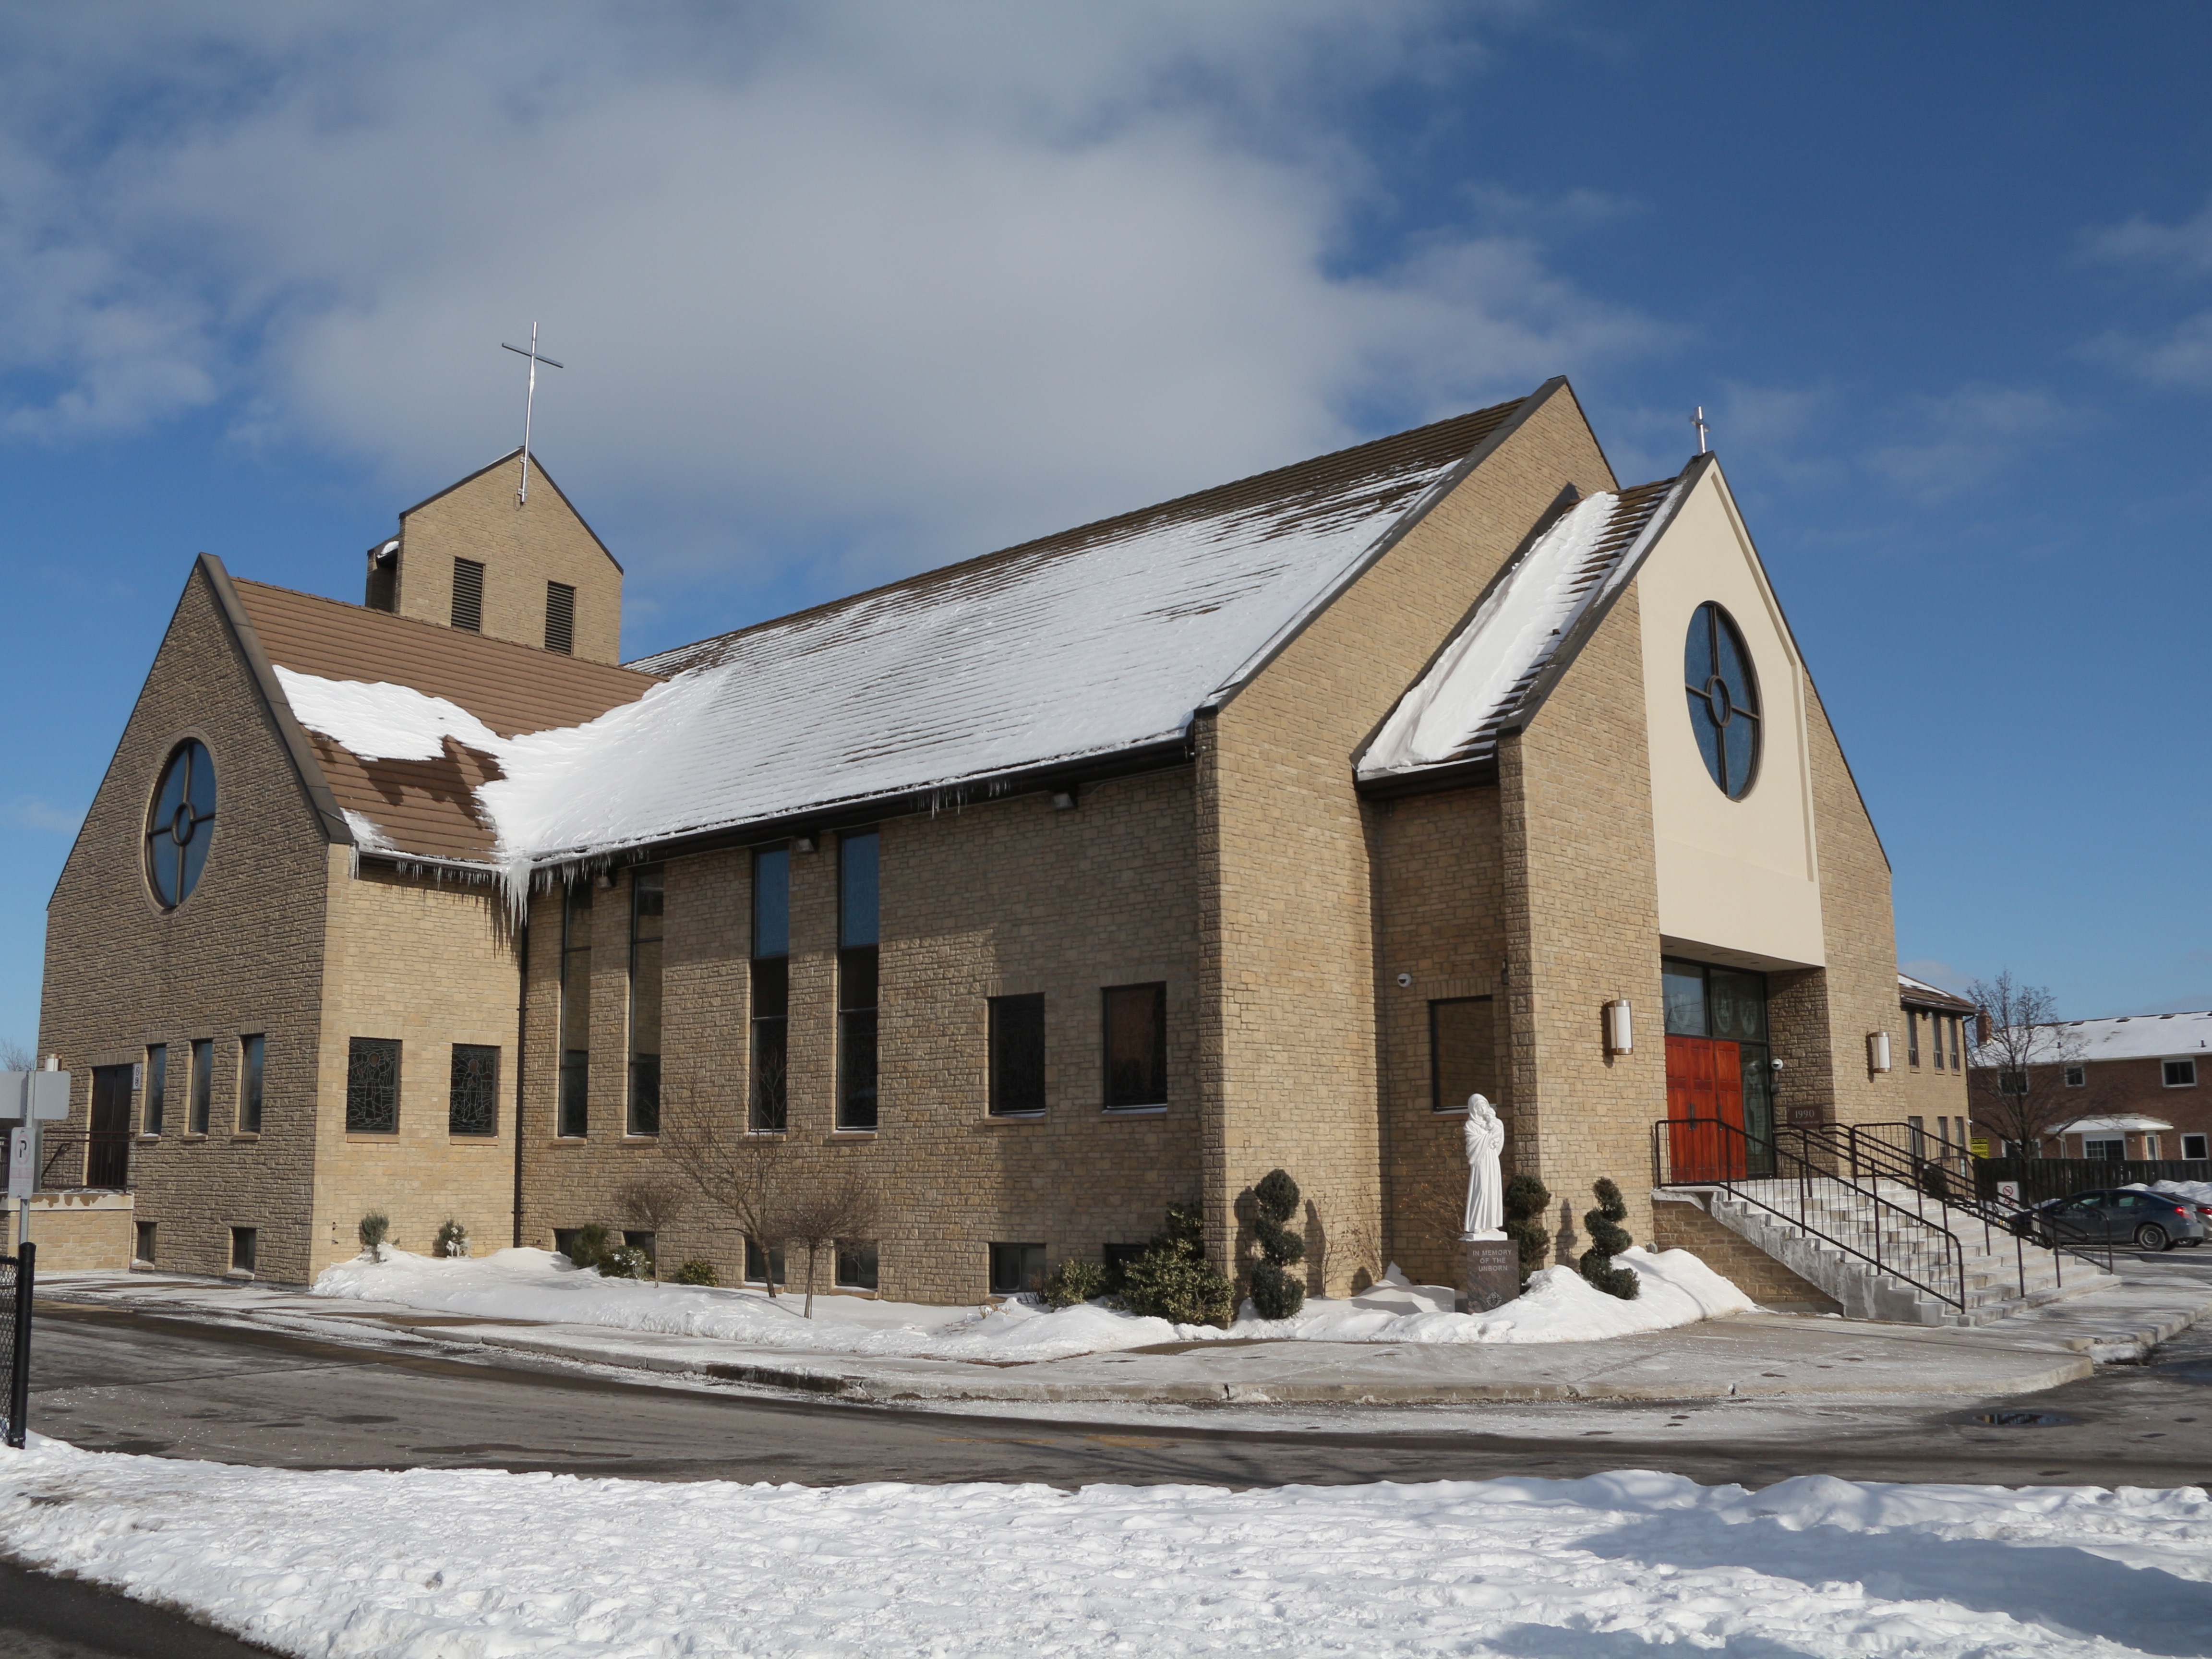 A photo of St. Leonard's Church taken in the winter